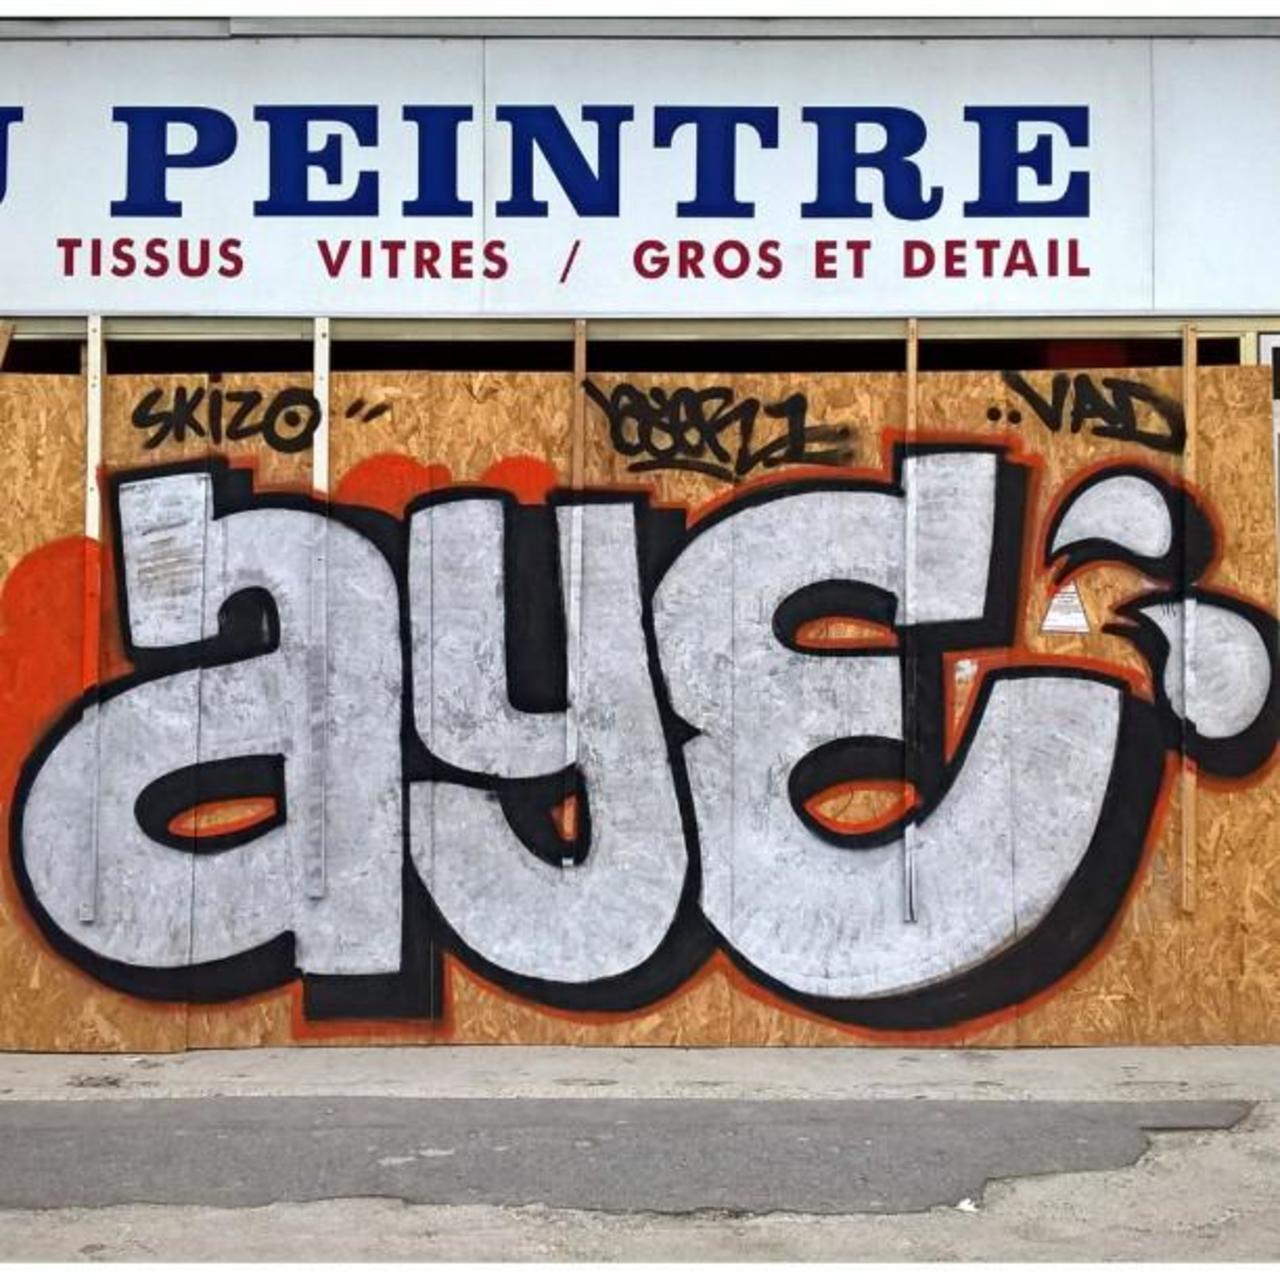 #Paris #graffiti photo by @maxdimontemarciano http://ift.tt/1O2Oqz6 #StreetArt http://t.co/AGDHfZhZ6D